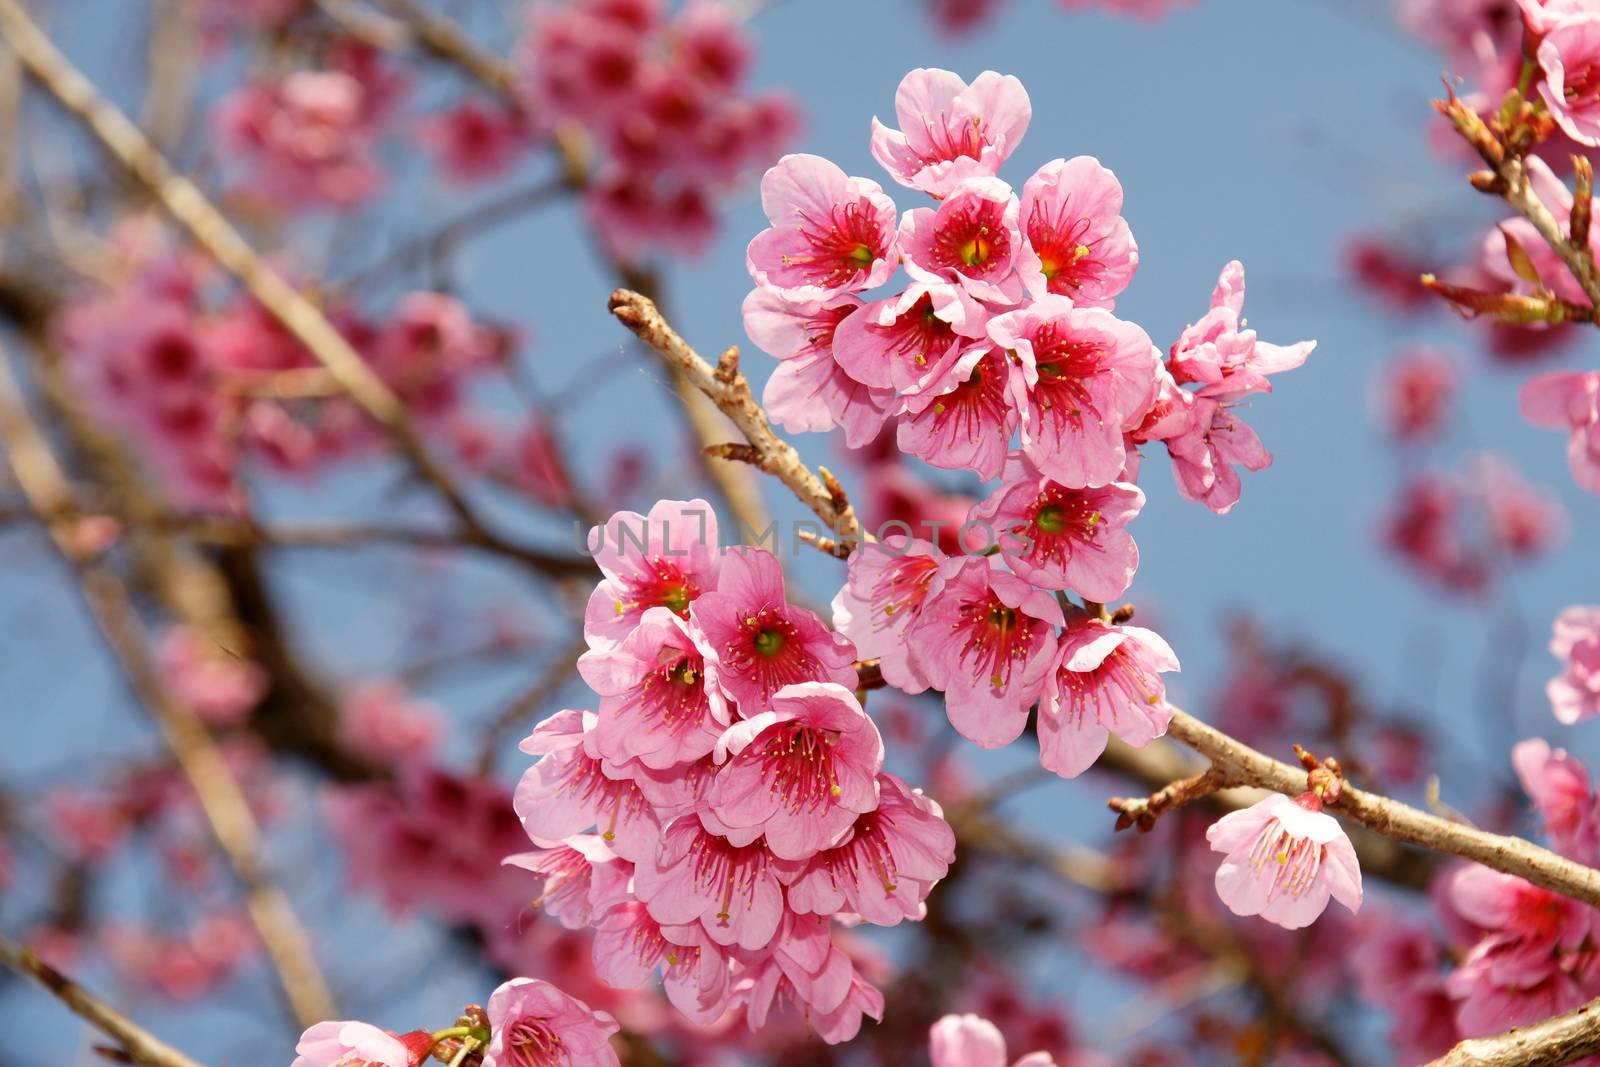 Cherry blossom or Sakura flower with blue sky, Chiangmai Thailand by mranucha